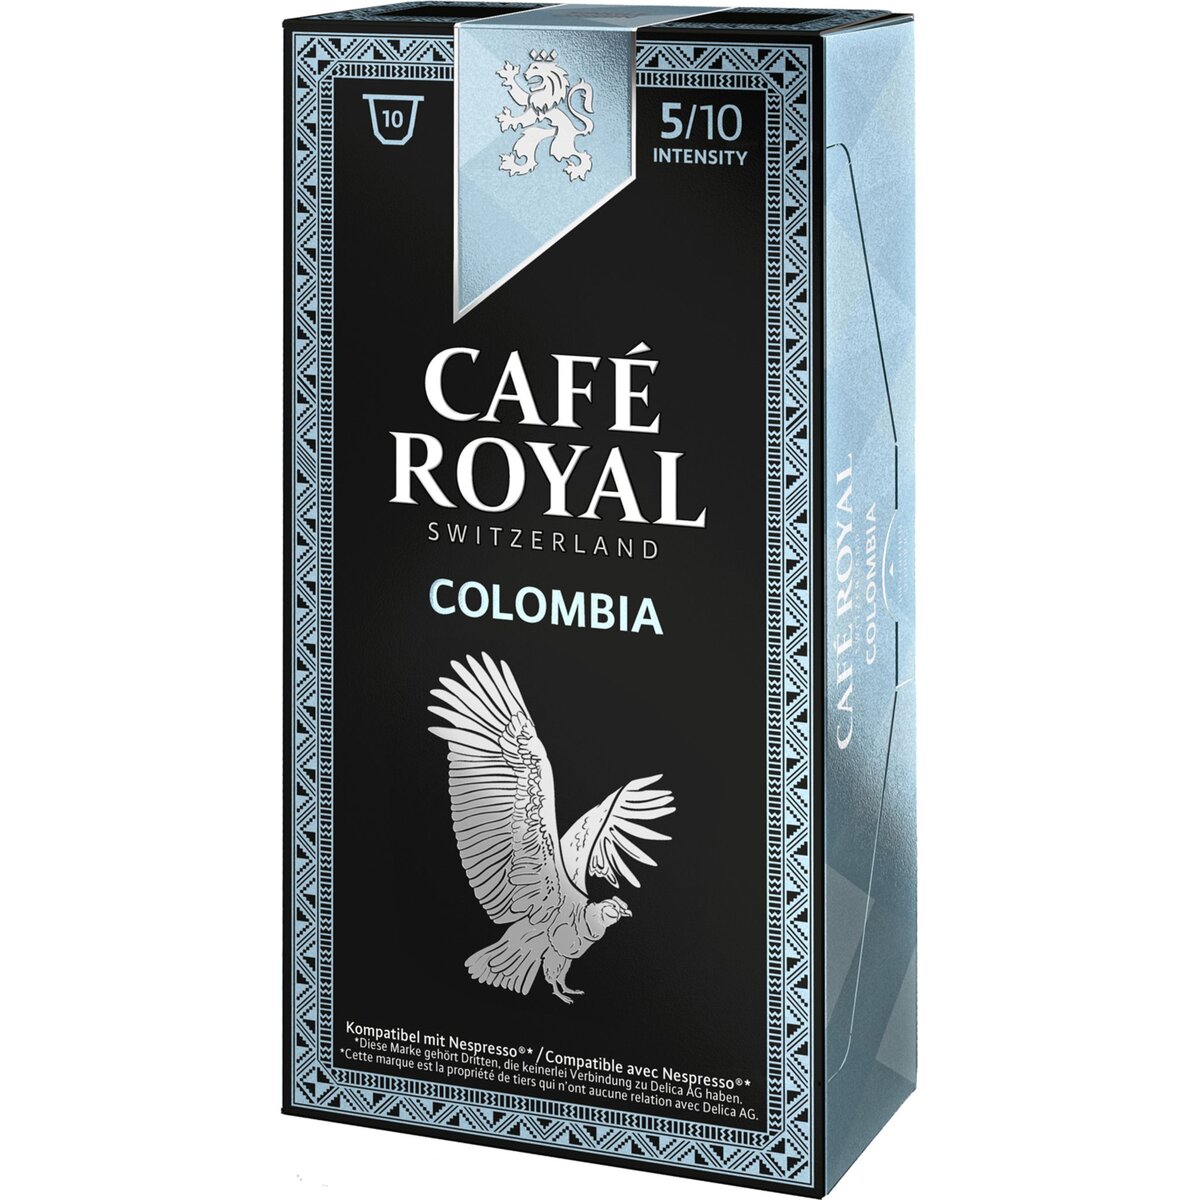 CAFE ROYAL Café Royal single origin colombia nespresso capsule x10 -50g